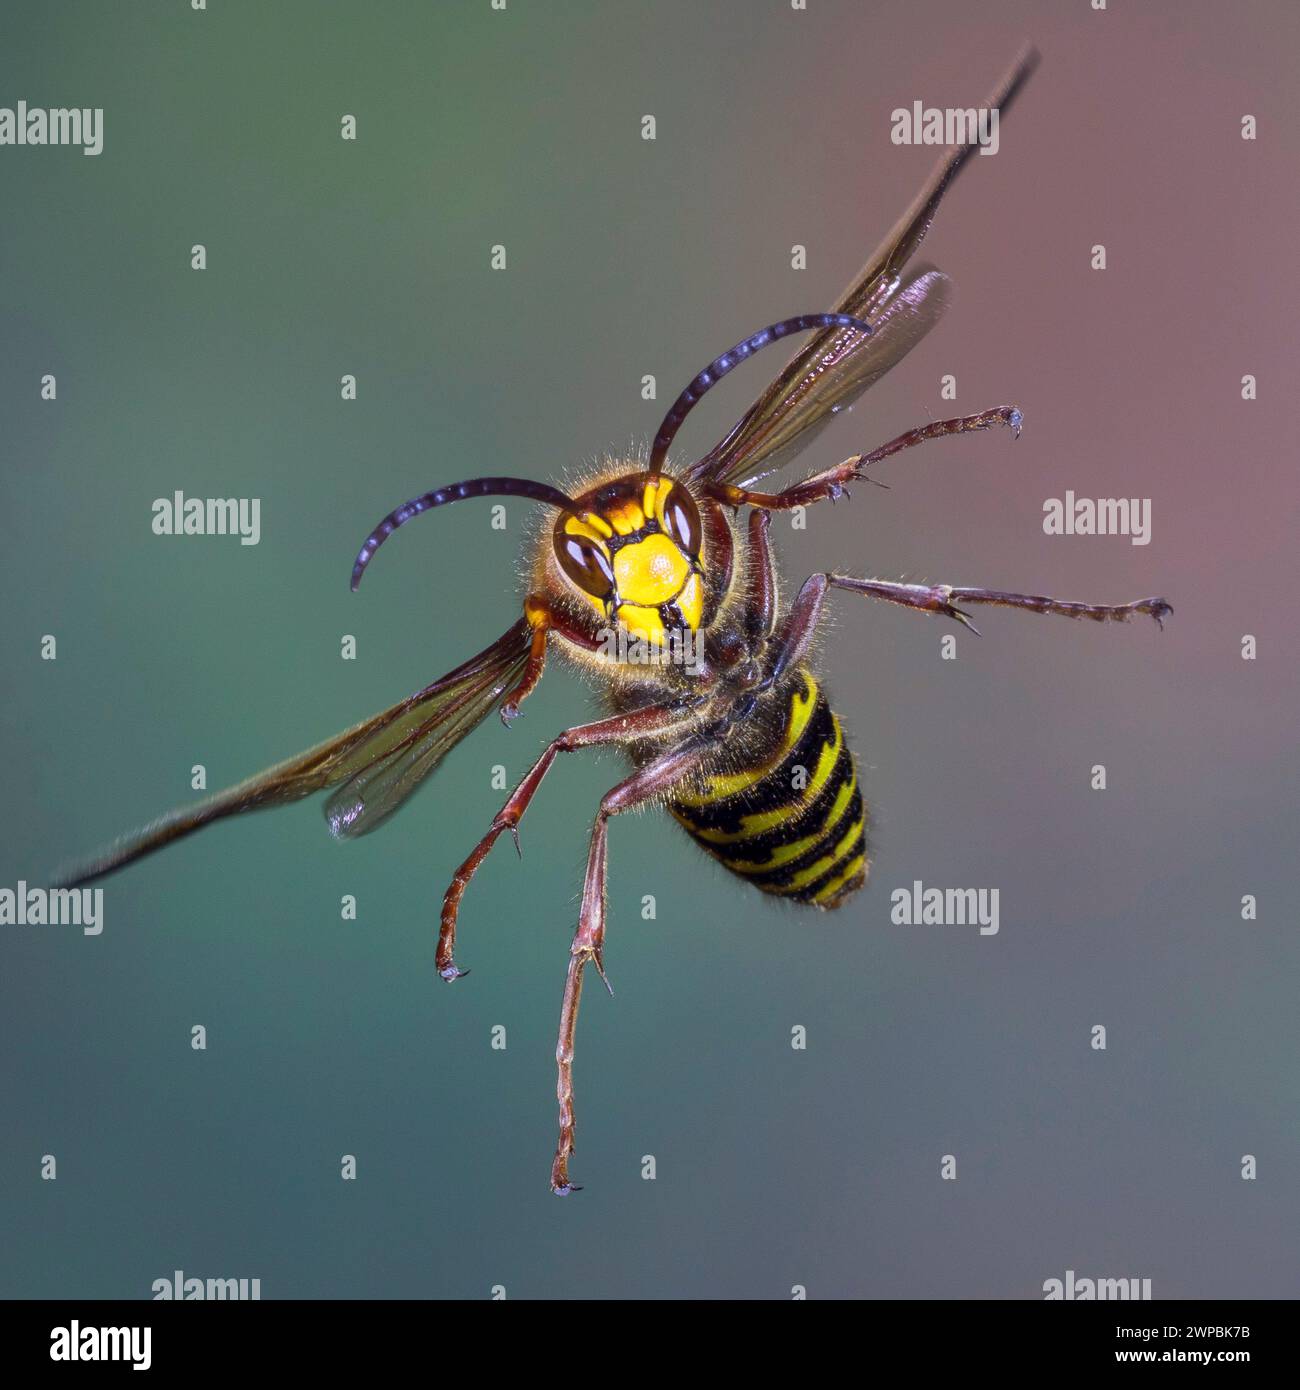 hornet, brown hornet, European hornet (Vespa crabro), in flight, high speed photography, Germany Stock Photo